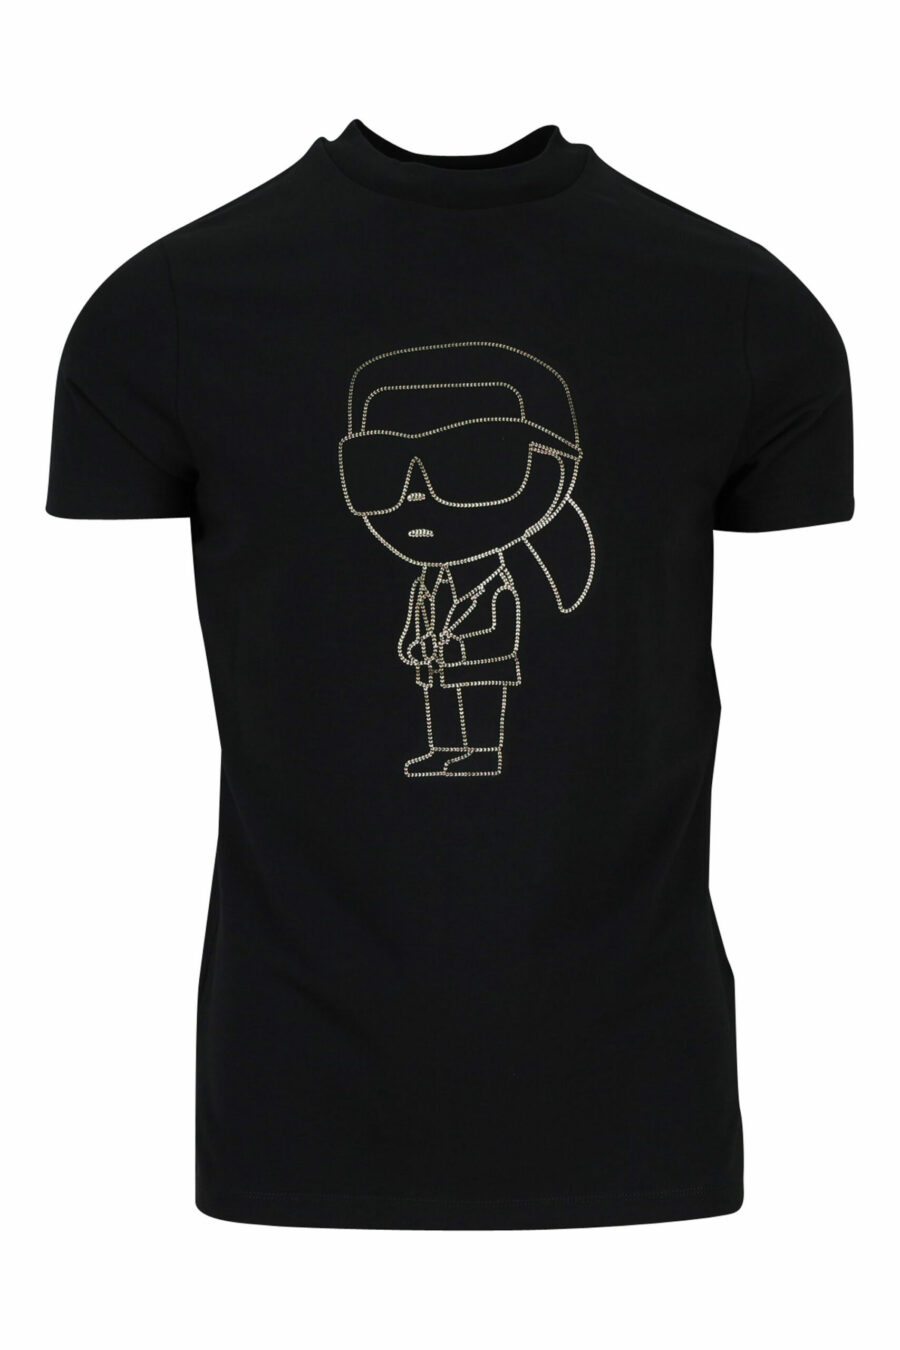 T-shirt noir avec maxilogo "karl" doré - 4062226681872